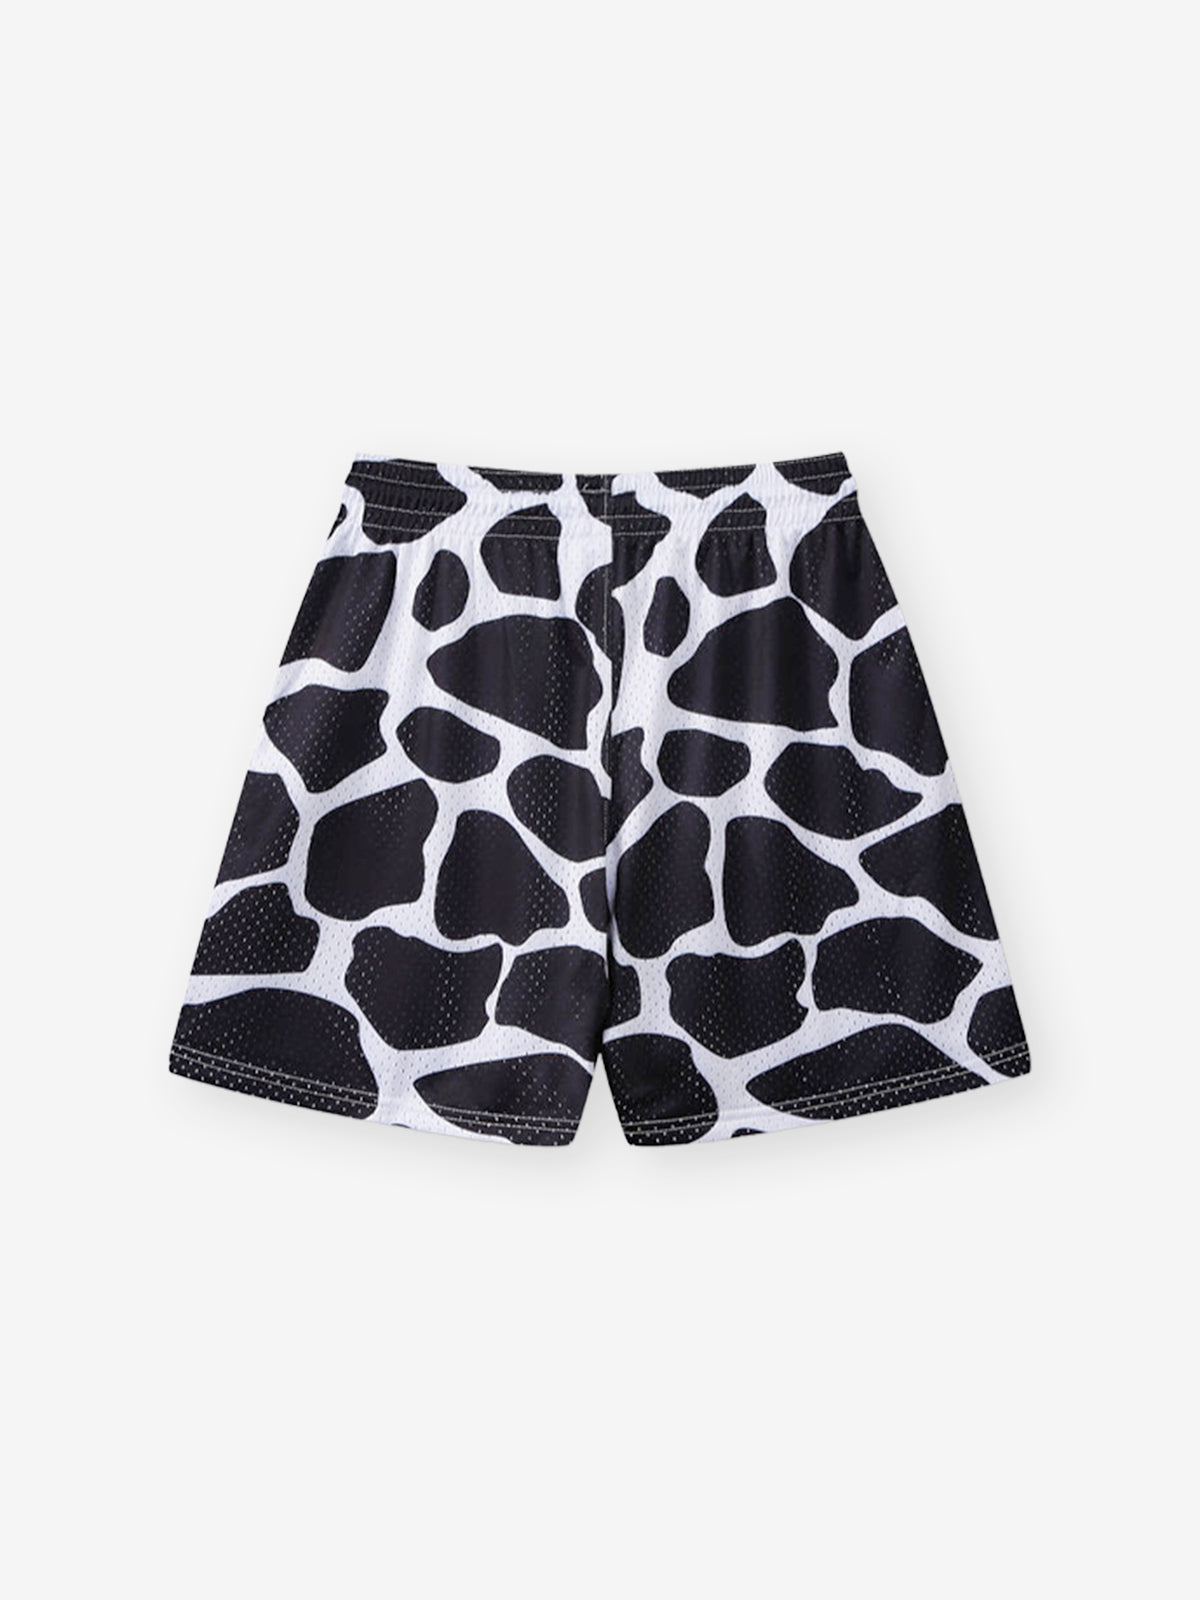 Giraffe pattern breathable sports shorts